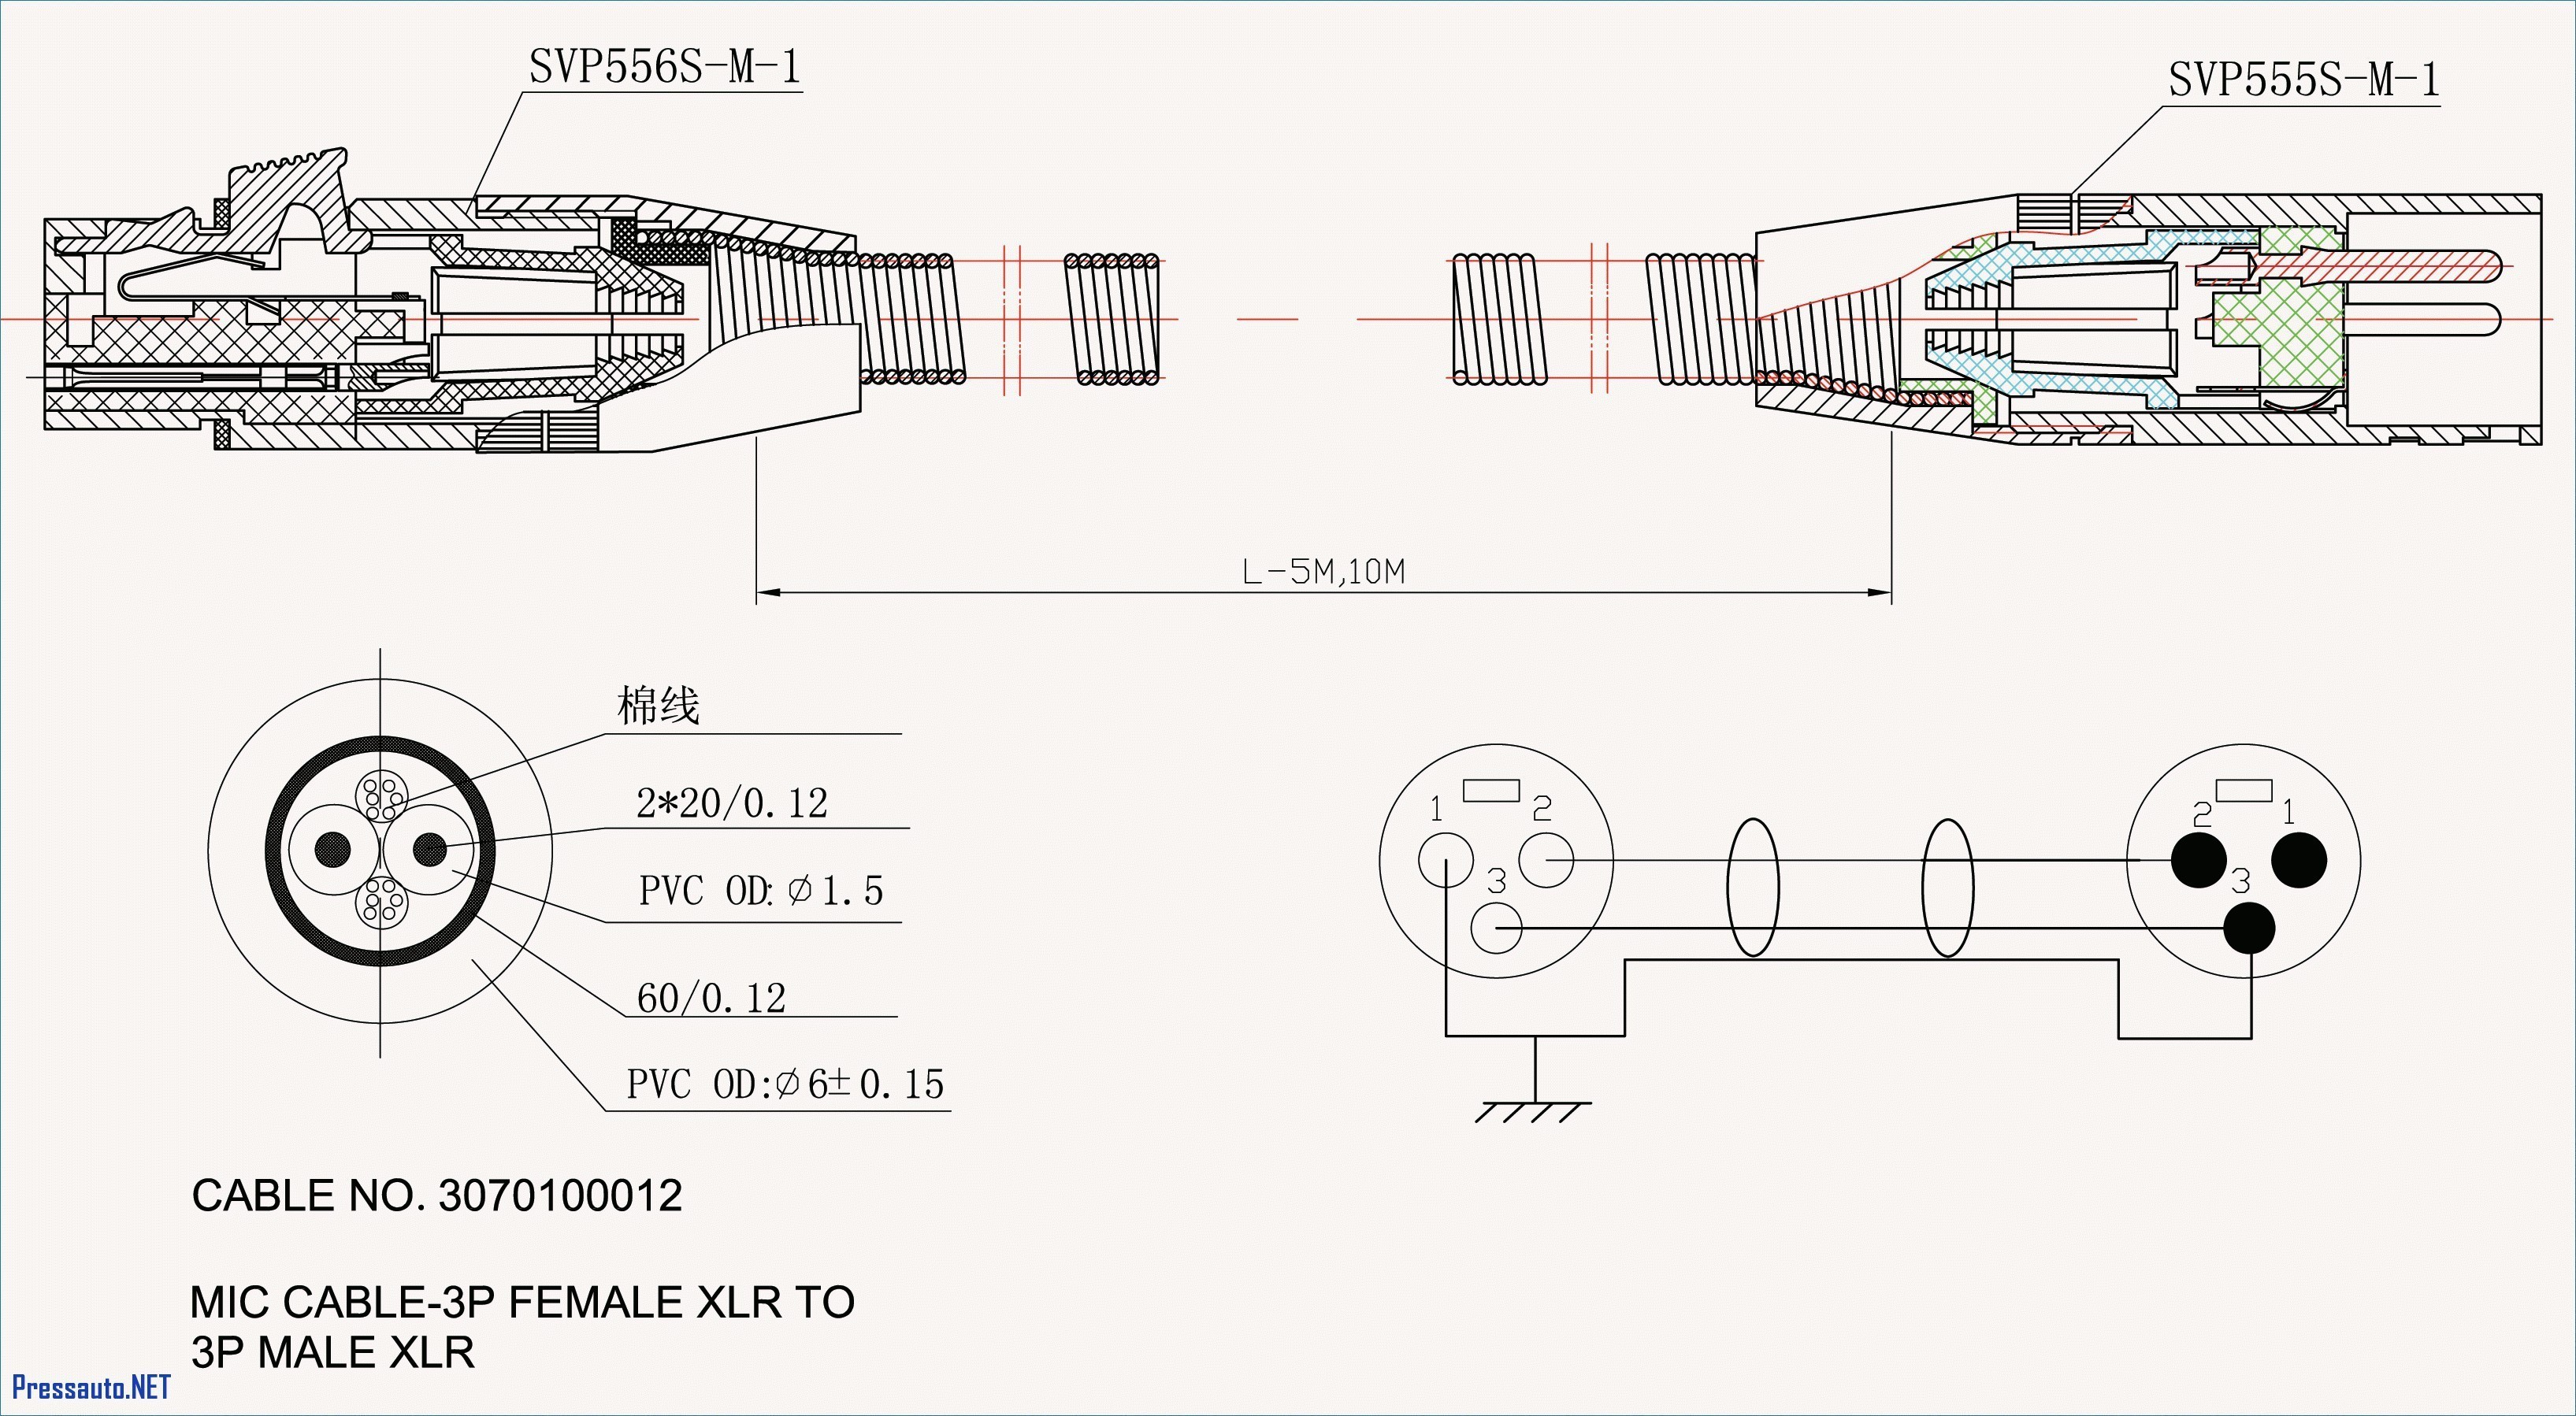 1996 toyota Camry Wiring Diagram 2002 Mazda Tribute Fuse Box Diagram Wiring Diagram Strategy Design Of 1996 toyota Camry Wiring Diagram